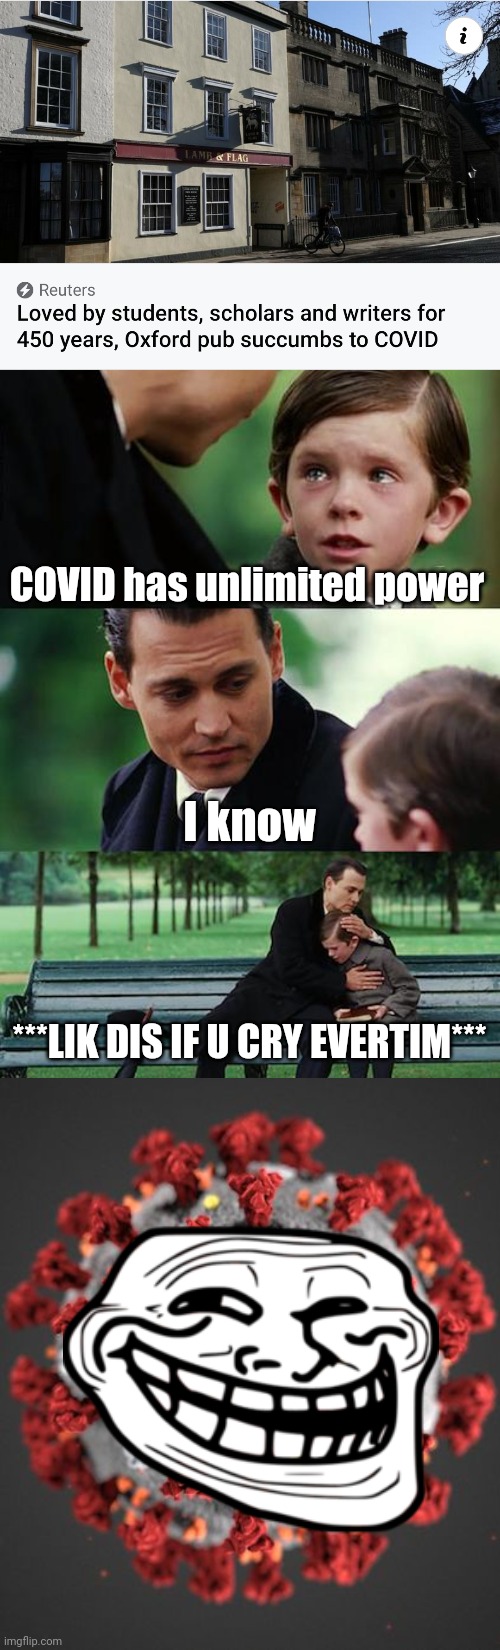 ***LIK DIS IF U CRY EVERTIM*** | COVID has unlimited power; I know; ***LIK DIS IF U CRY EVERTIM*** | image tagged in memes,finding neverland,covid 19,corona virus,covid,sars | made w/ Imgflip meme maker